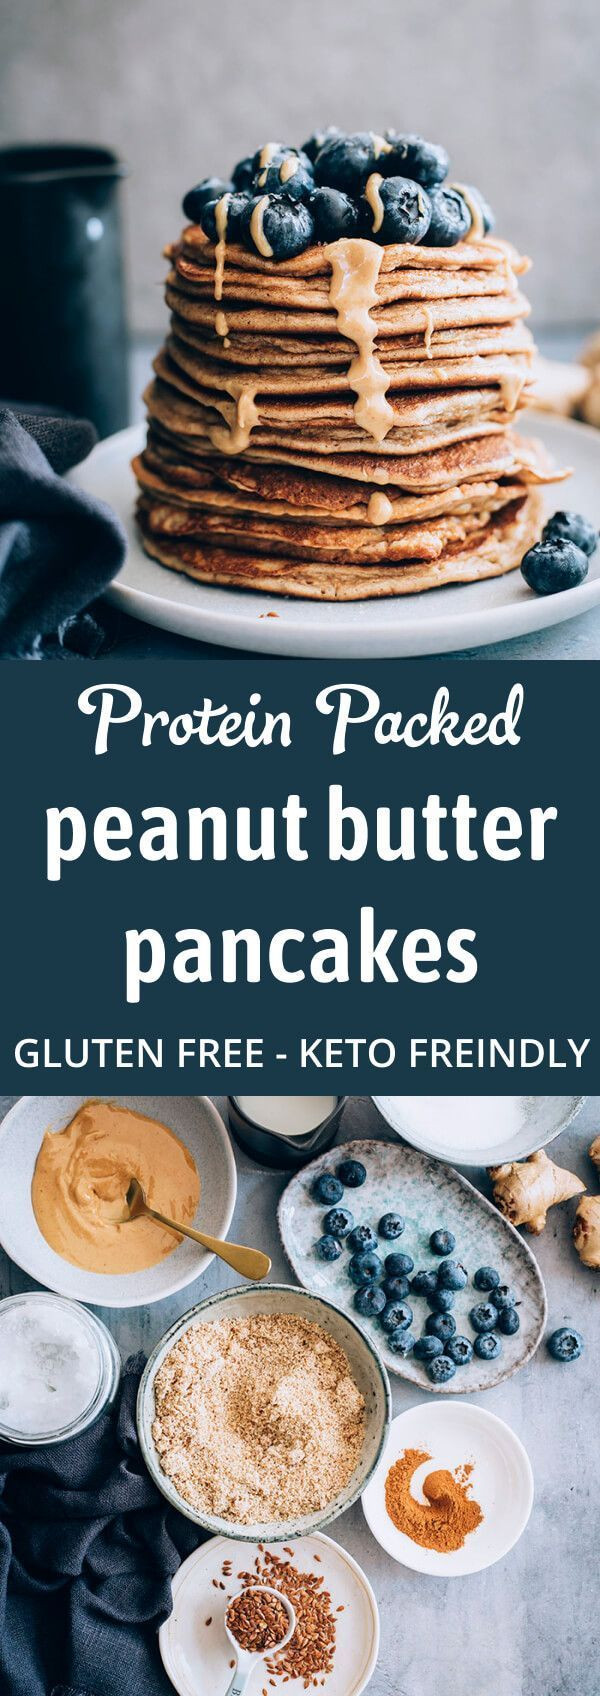 Dairy Free Keto Pancakes Almond Flour
 GLUTEN FREE VEGAN KETO PEANUT BUTTER PANCAKES WITH ALMOND